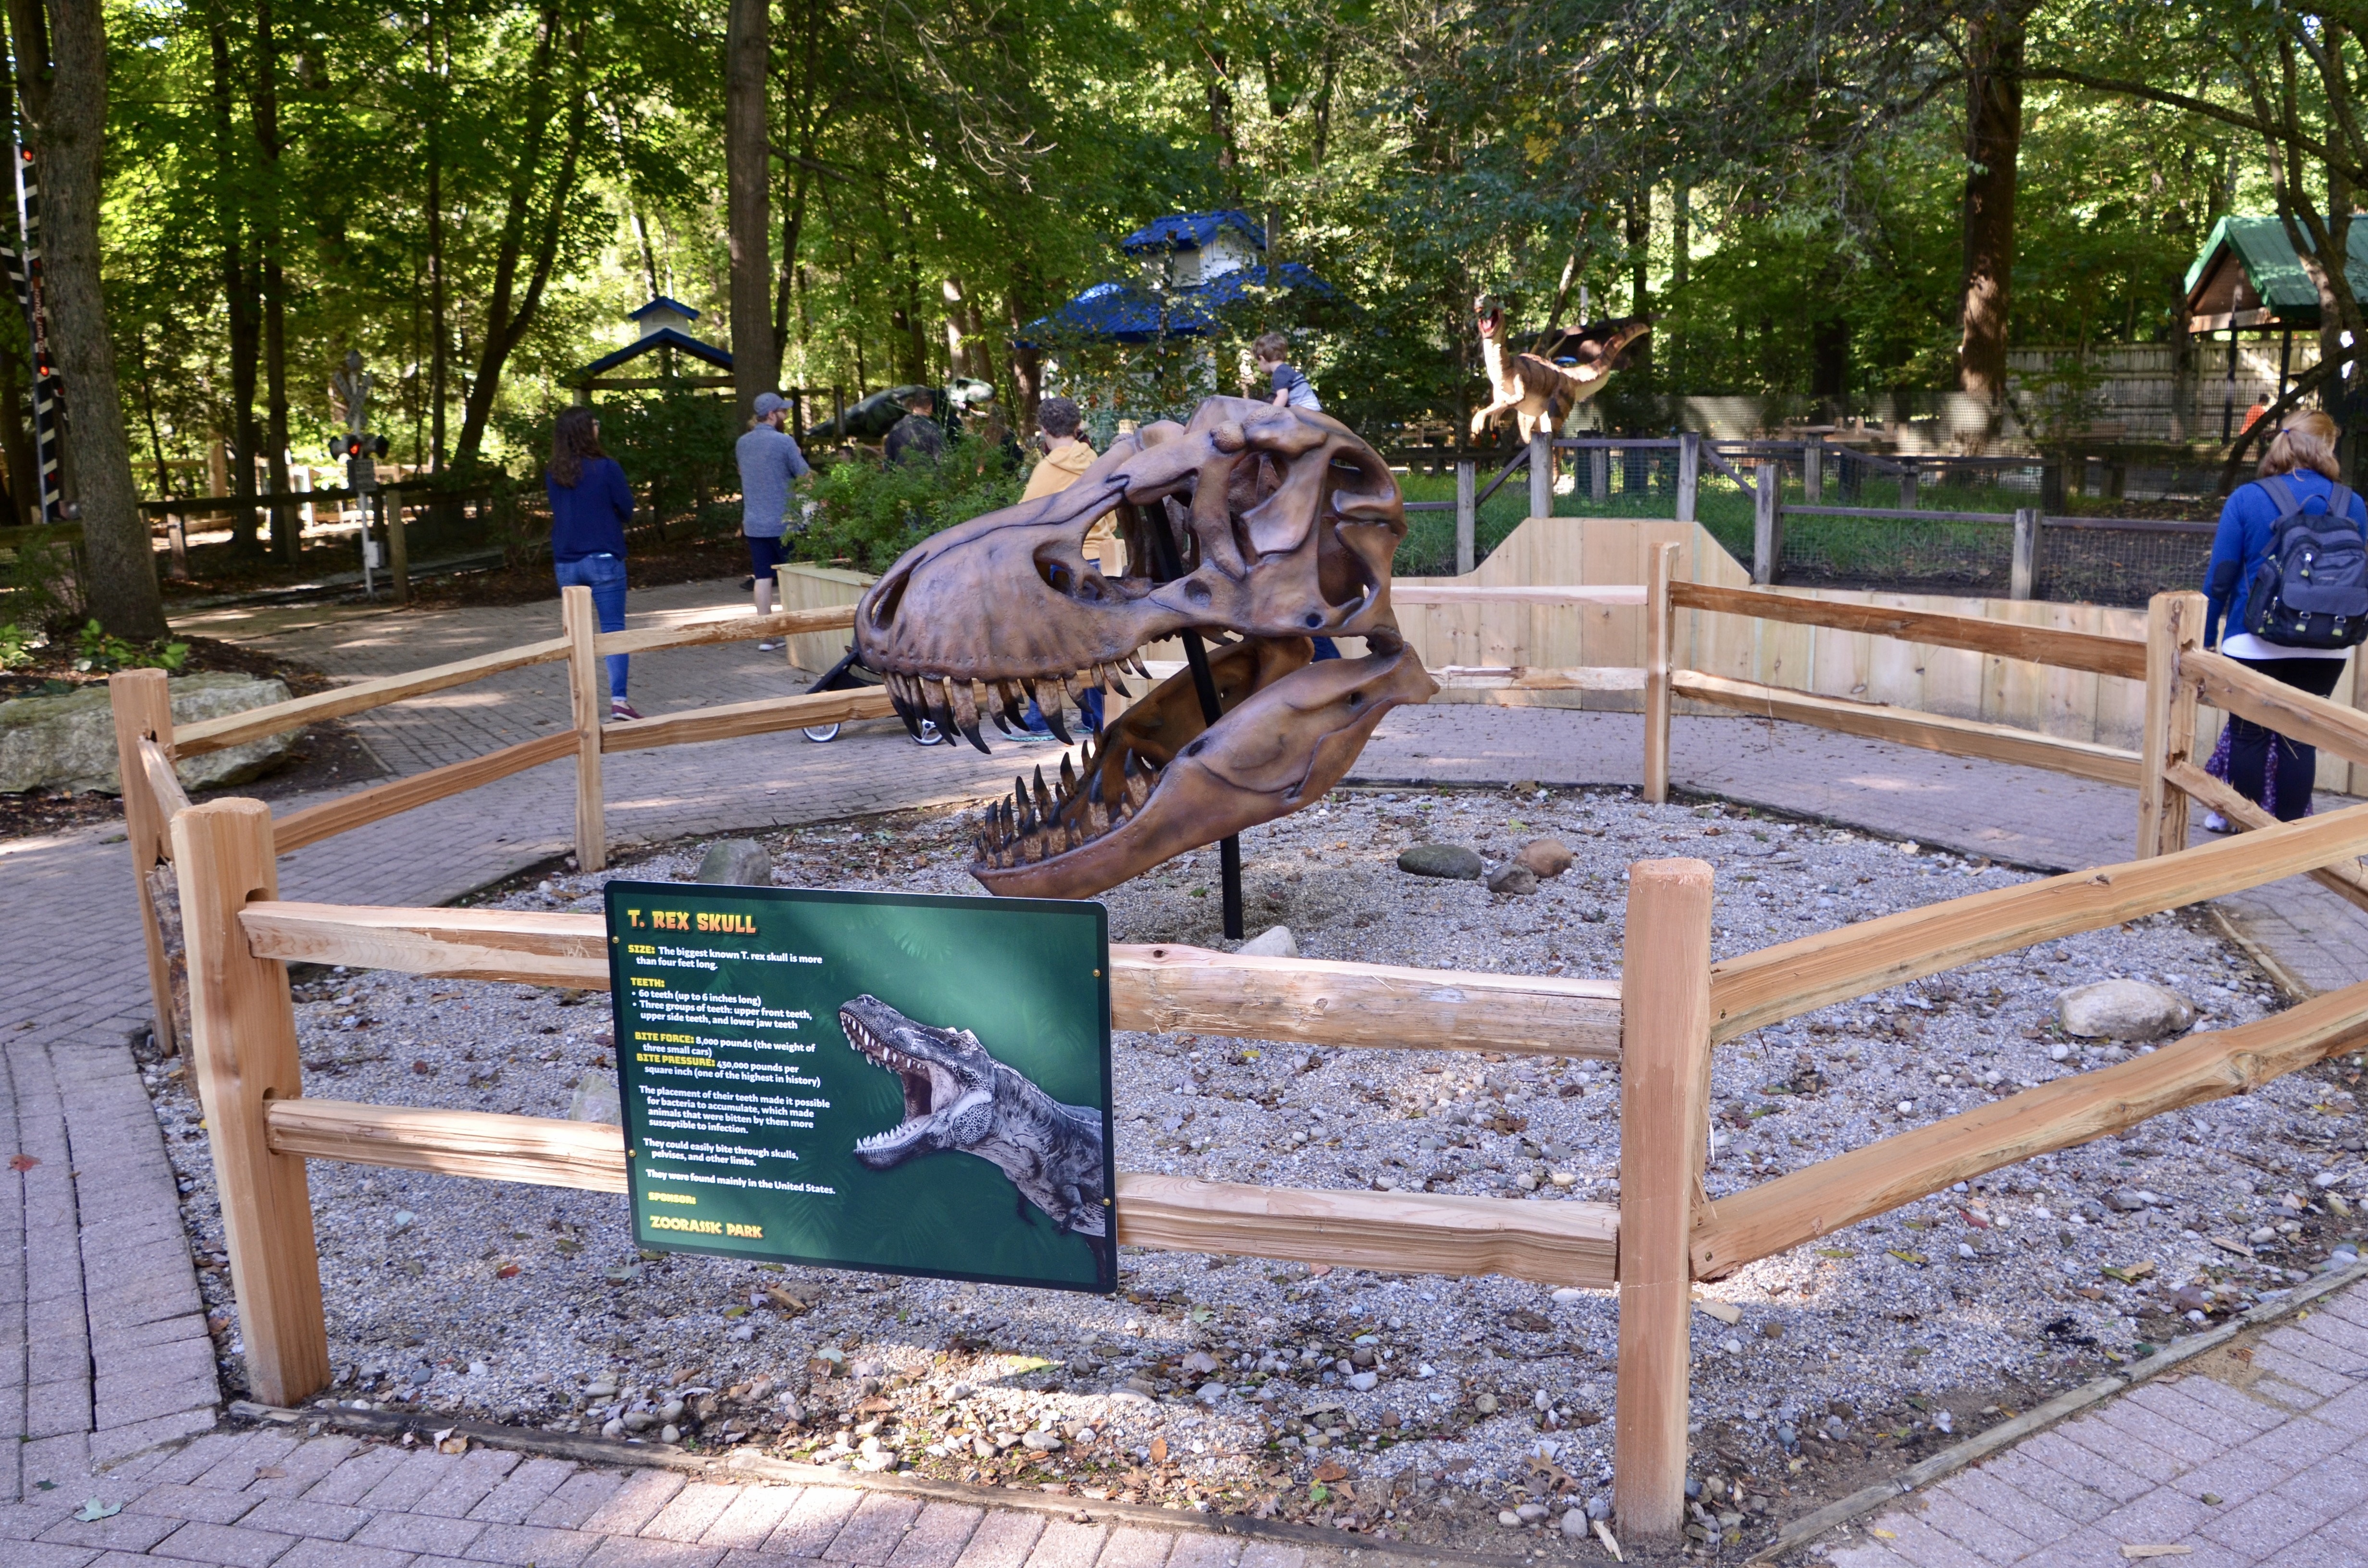 Zoorassic Park Binder Park Zoo T Rex Skull